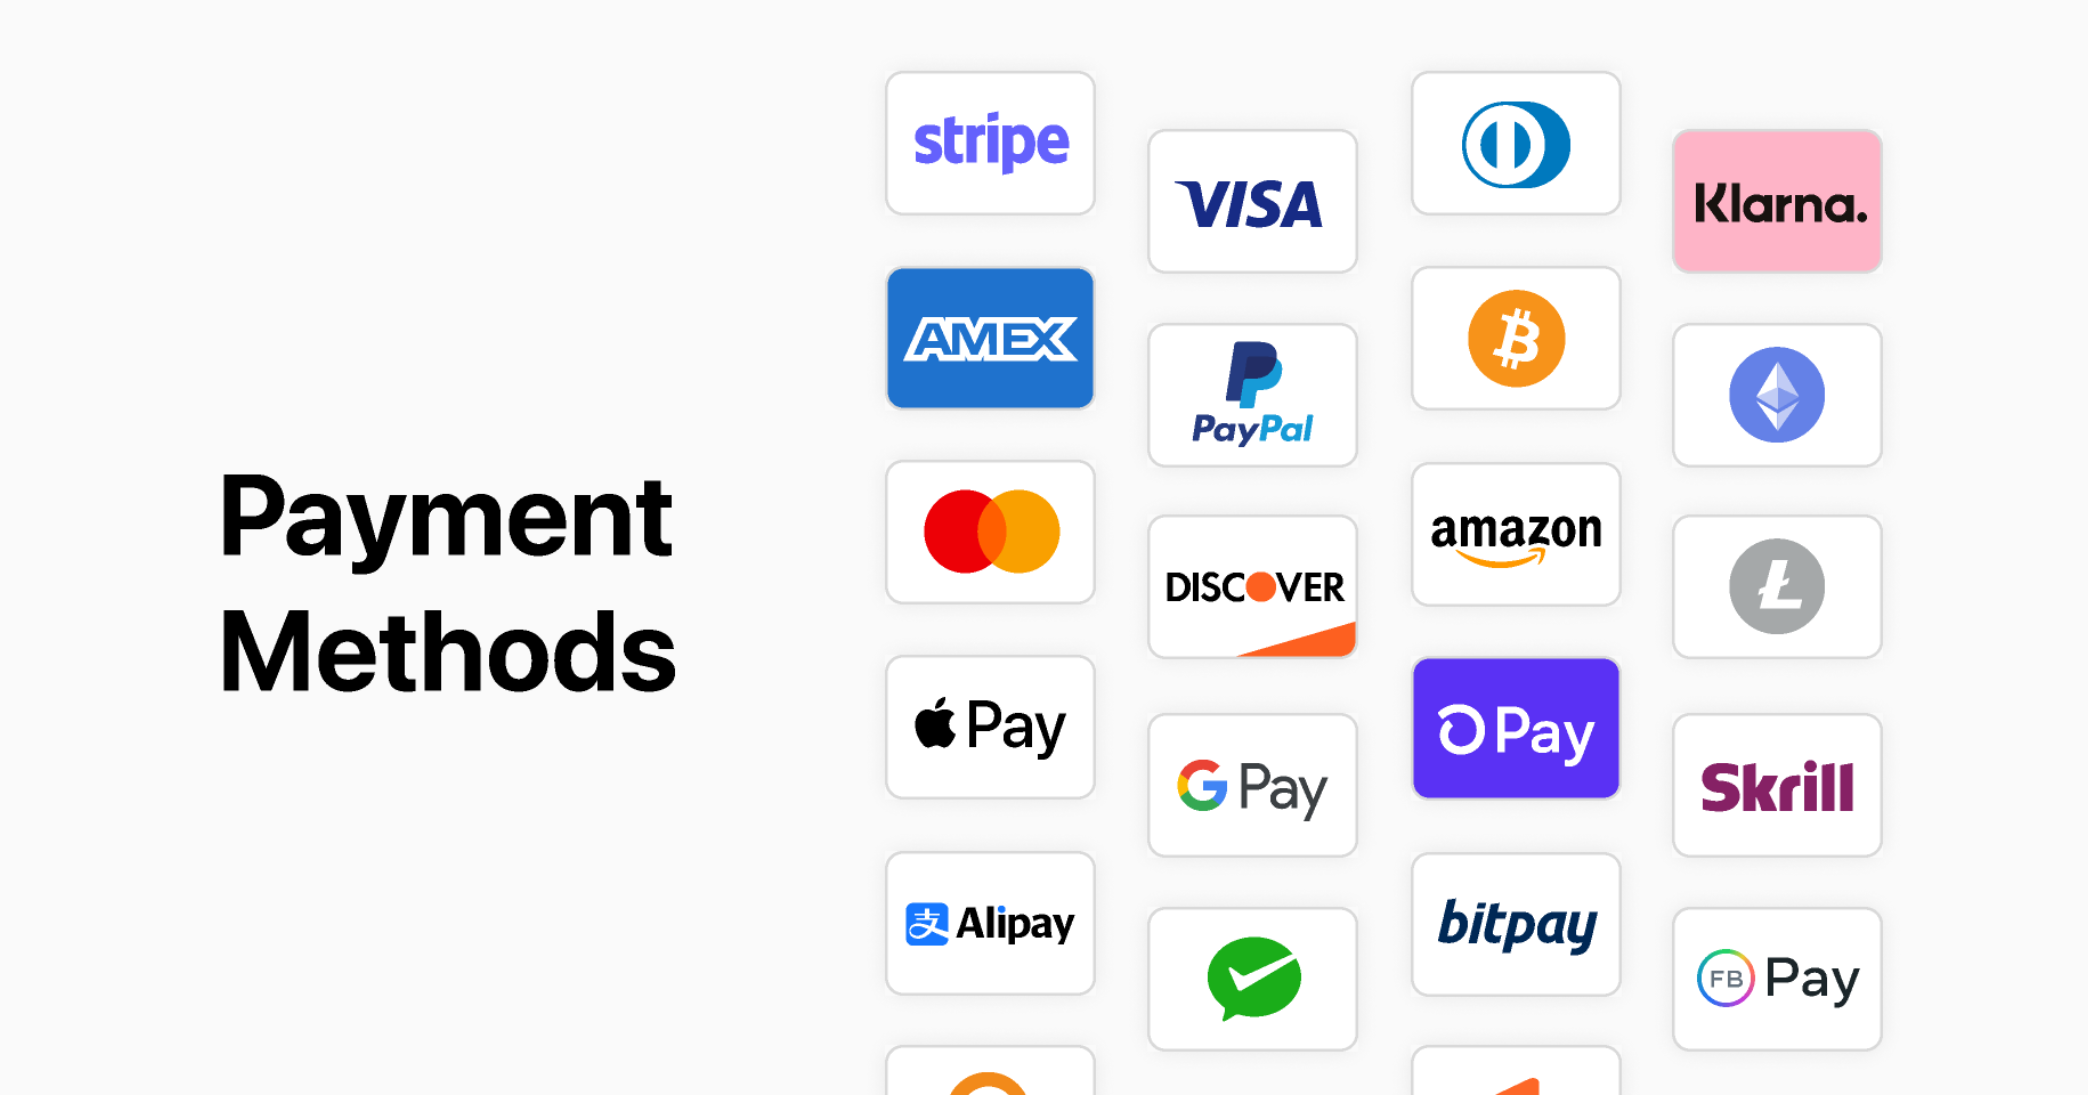 Payment methods icons - paypal, visa, amex, klarna, googlepay ,apple pay